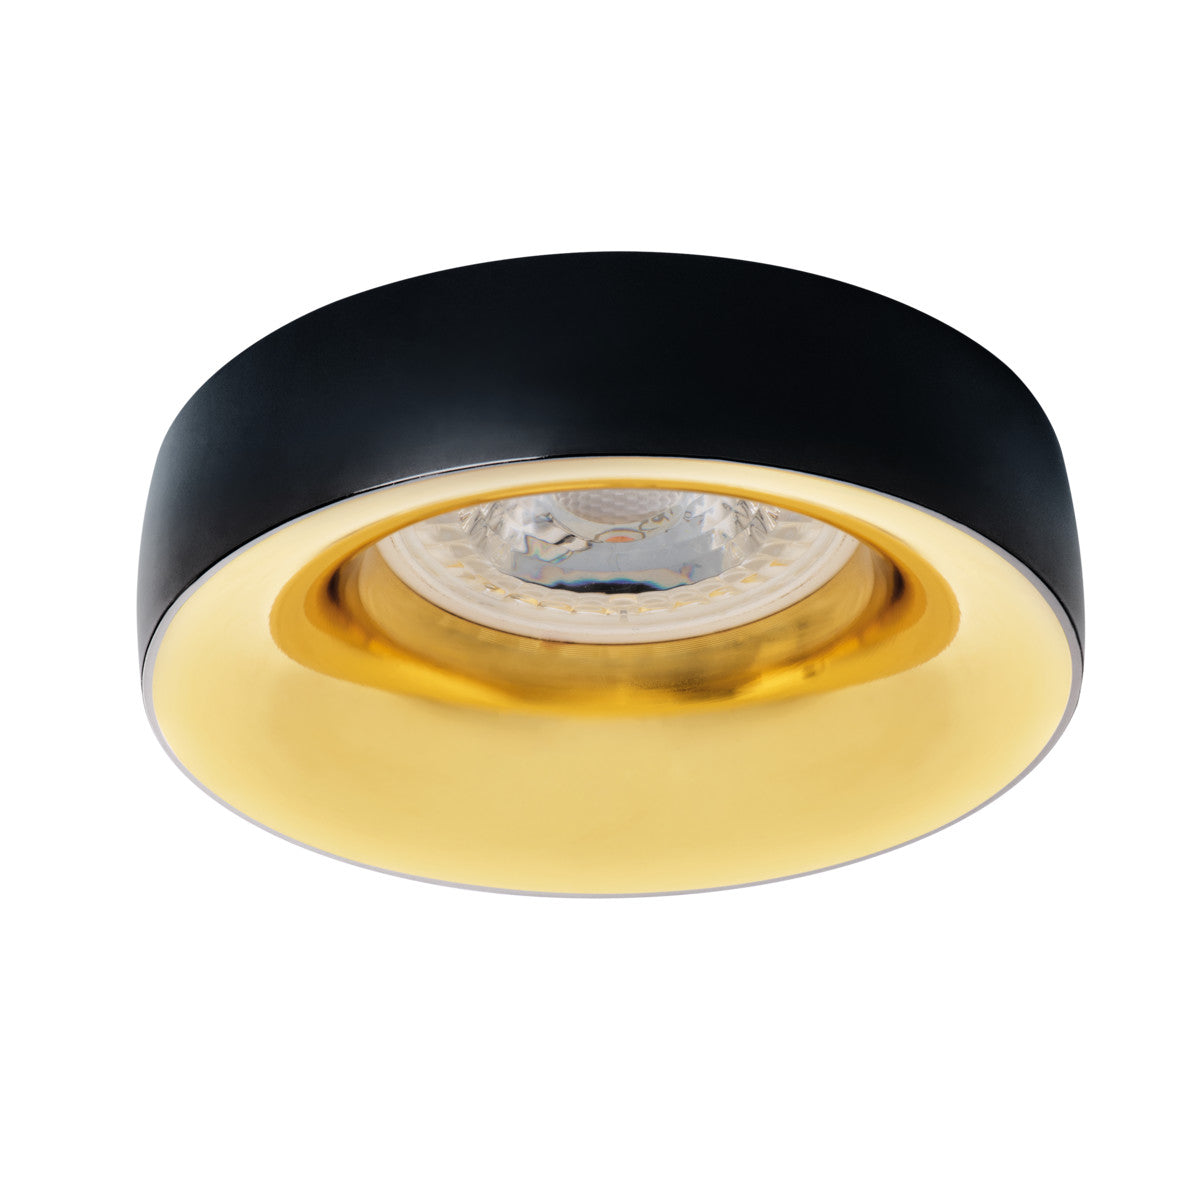 Kanlux ELNIS Round Ceiling Mounted GU10 Decorative Spot Light Fitting